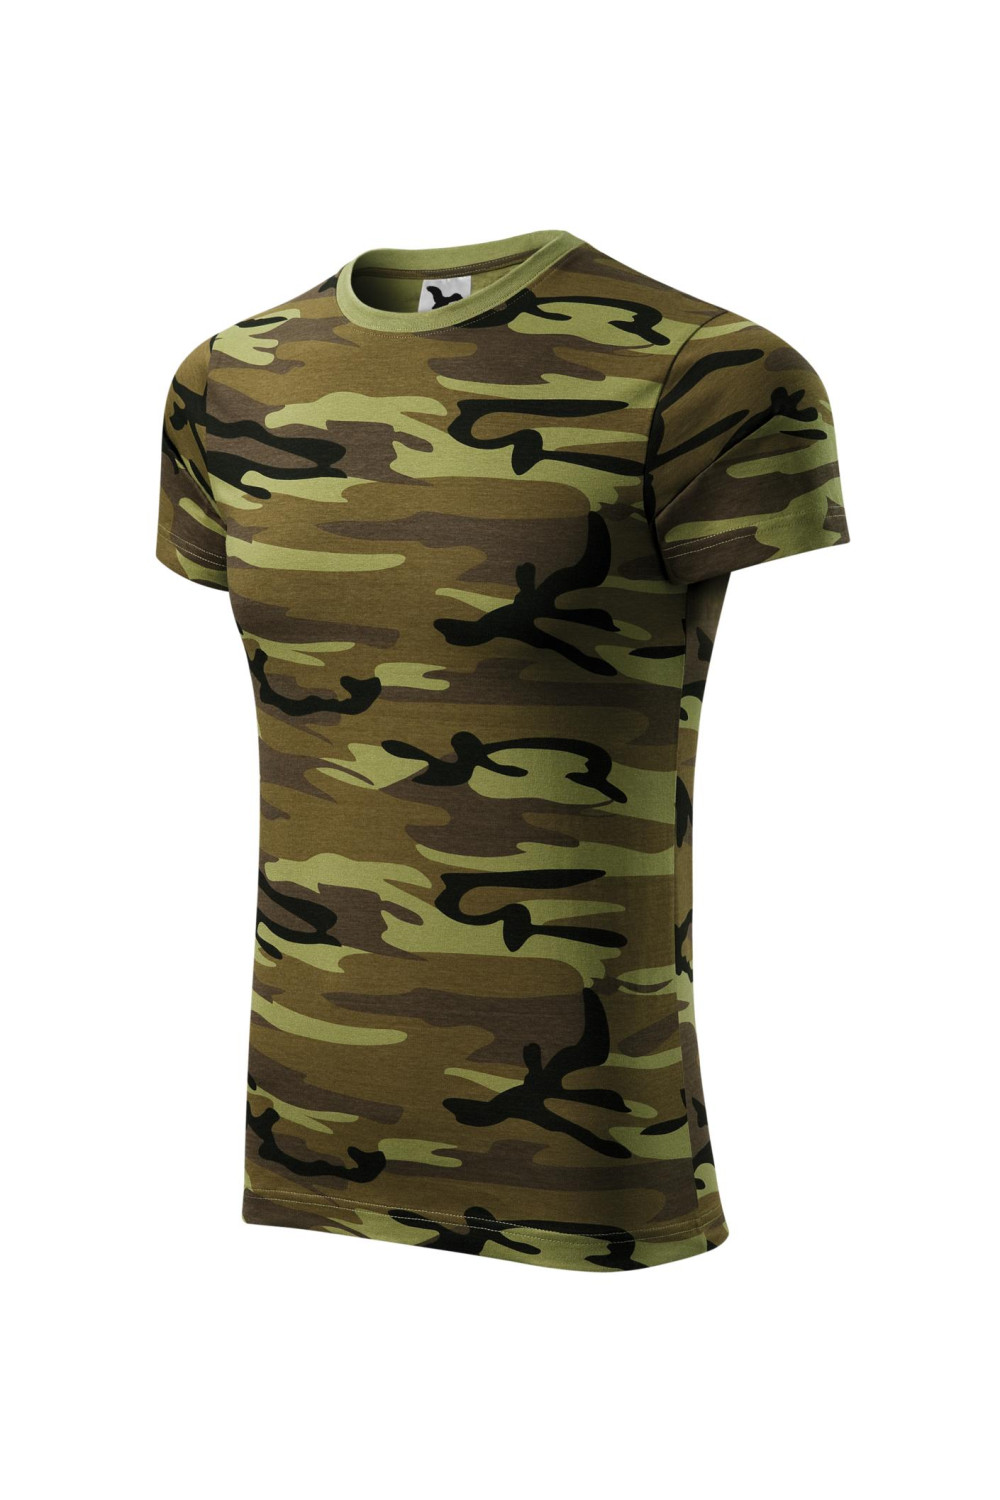 CAMOUFLAGE 144 Koszulka męska 100% bawełna koszulki / T-shirt Koszulka męska 100% bawełna koszulki / T-shirt camouflage green